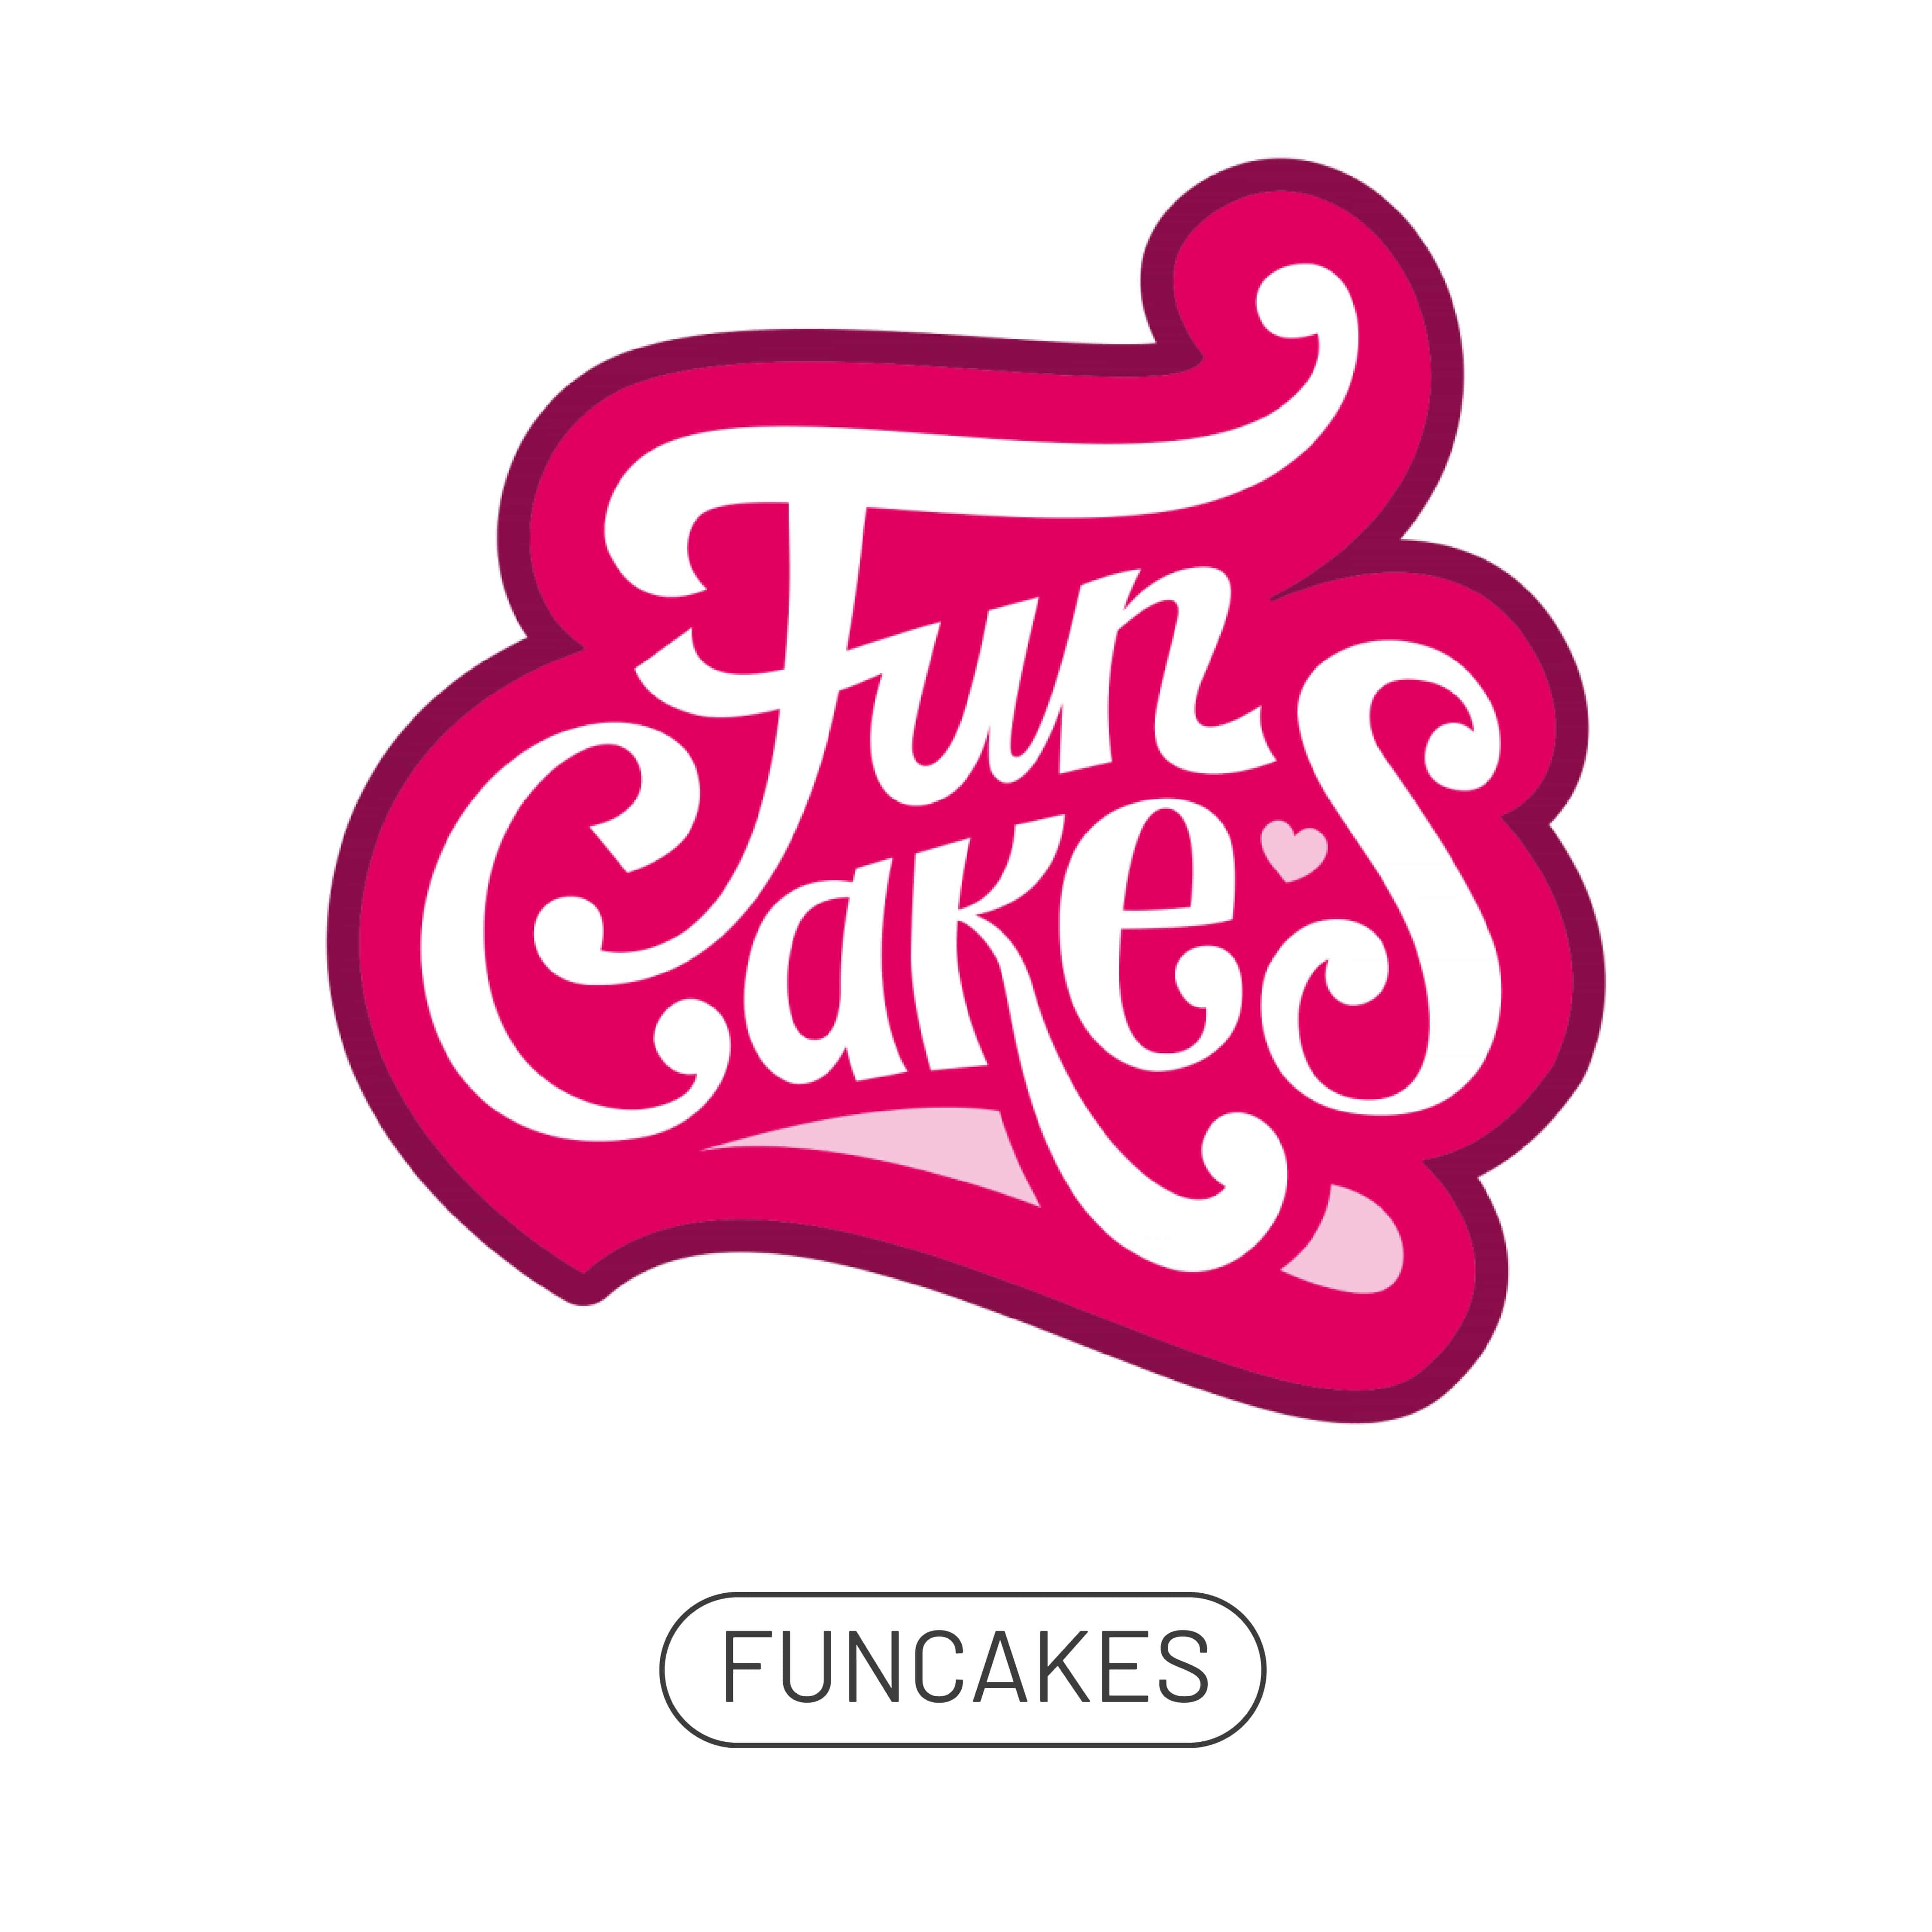 Funcakes Be creative!